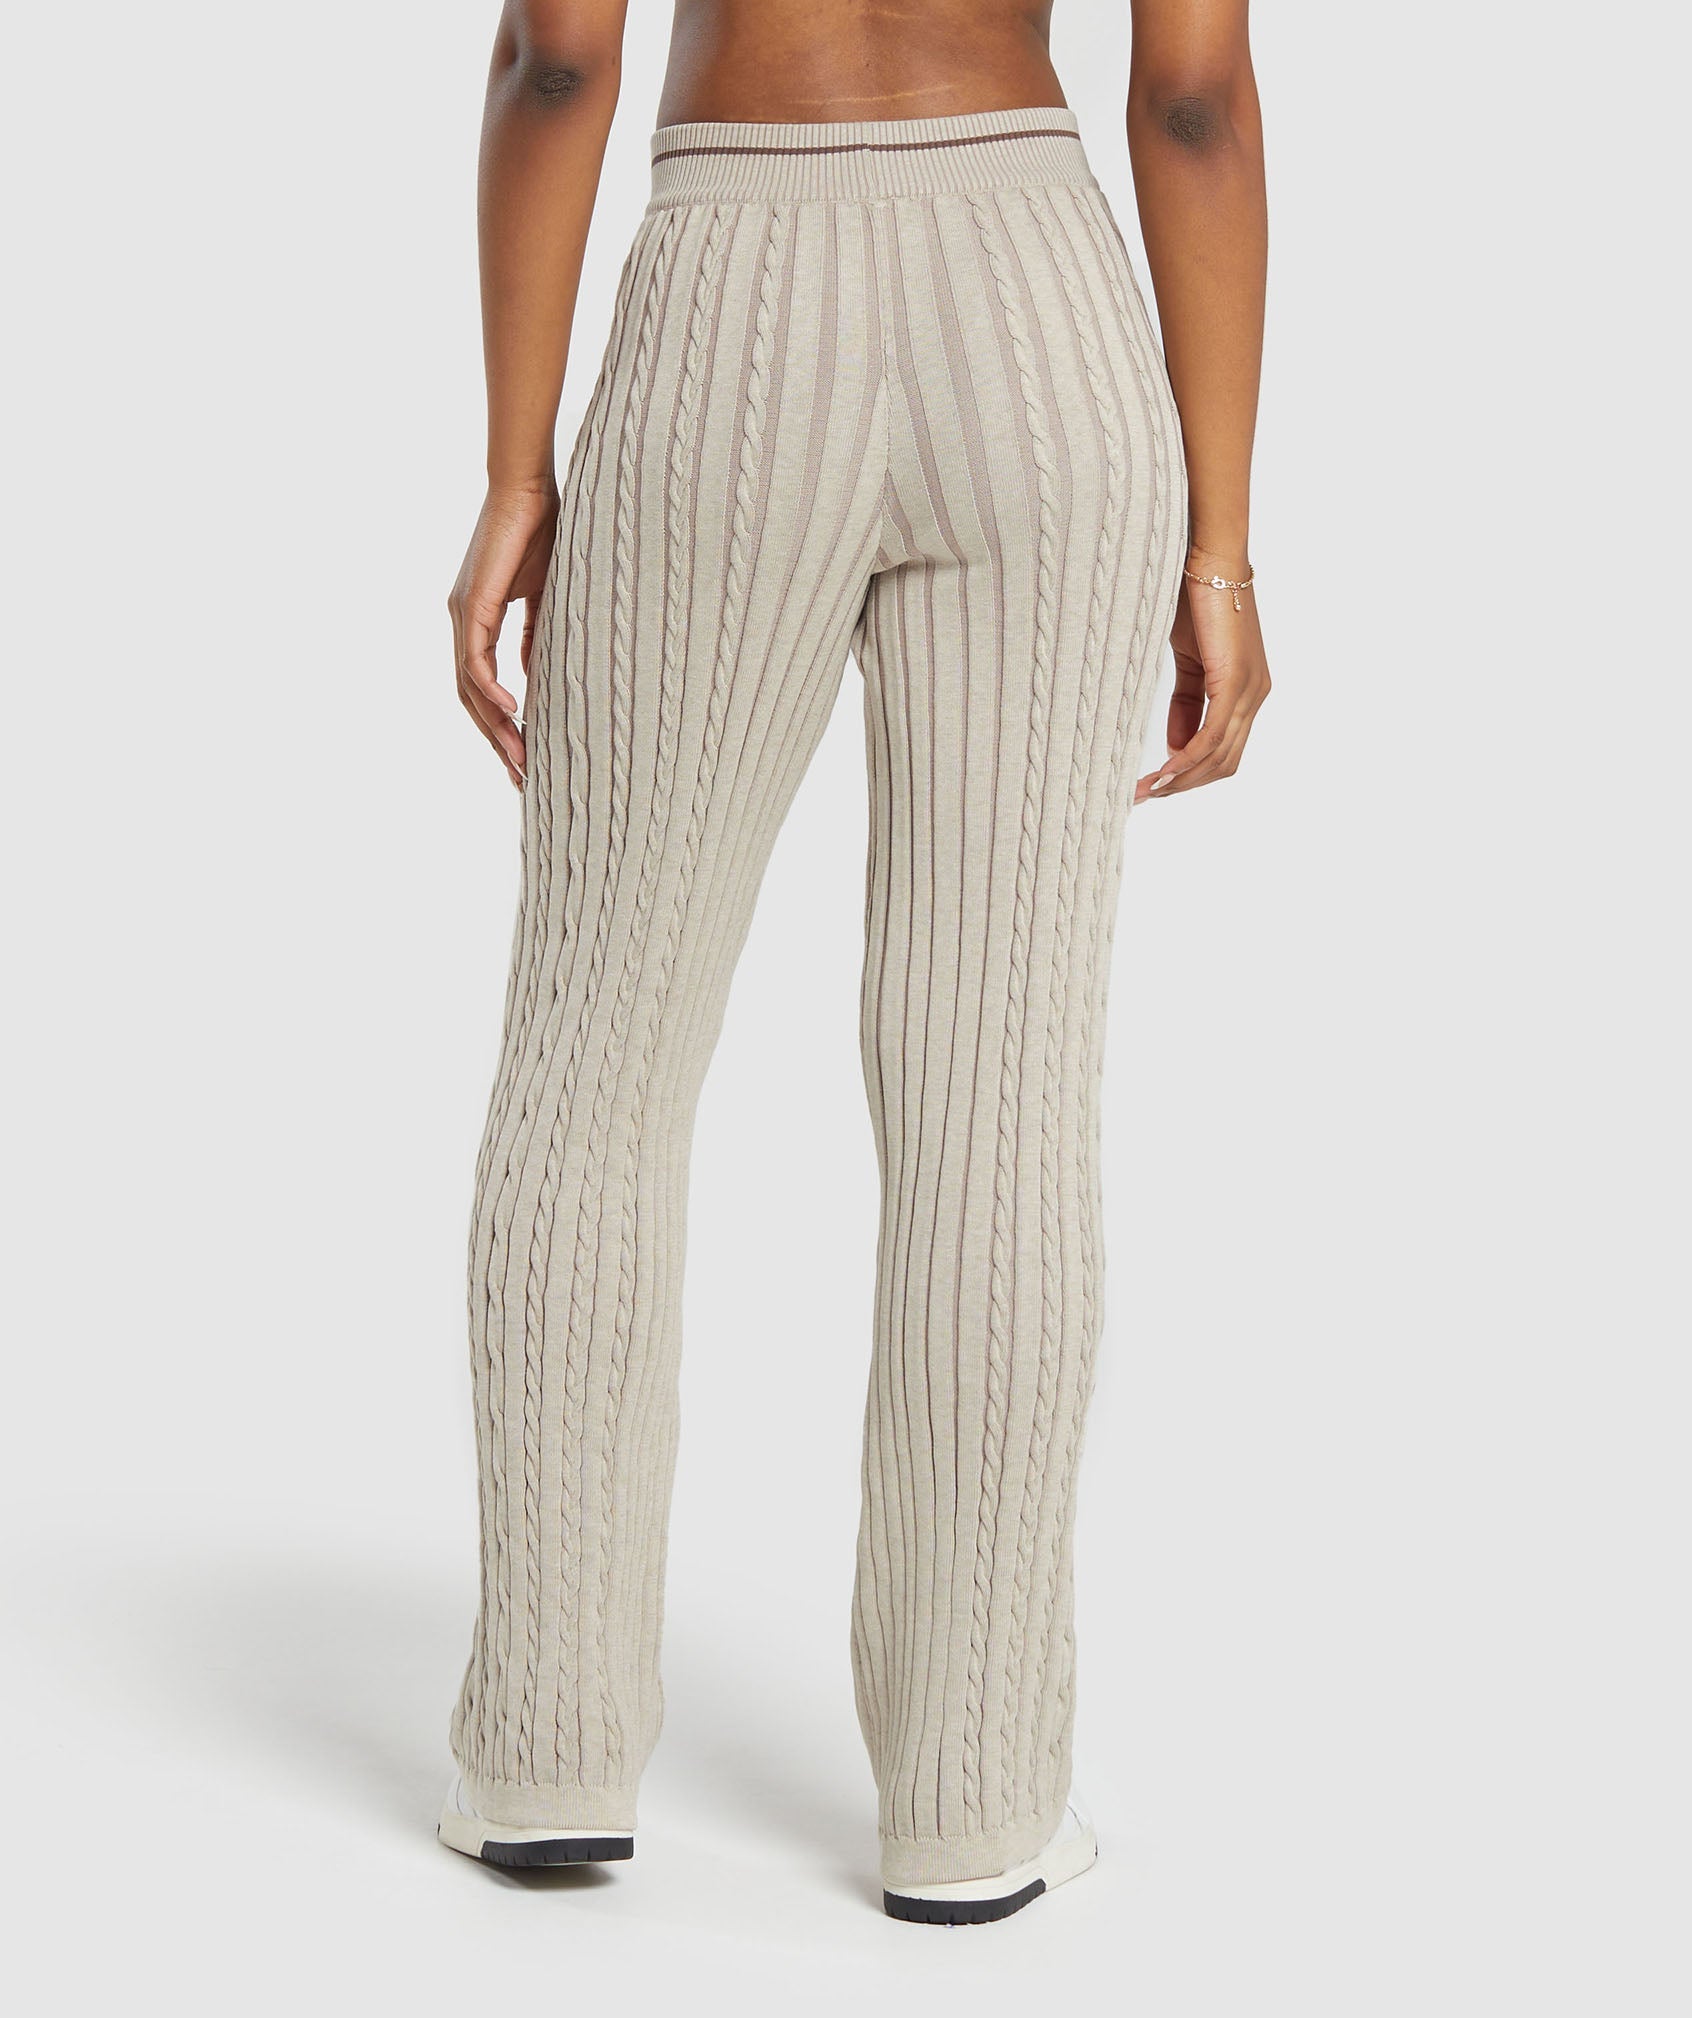 GYMSHARK JOGGER PANTS Womens Medium Winter Berry Crop Ark High Waisted  pants $27.77 - PicClick